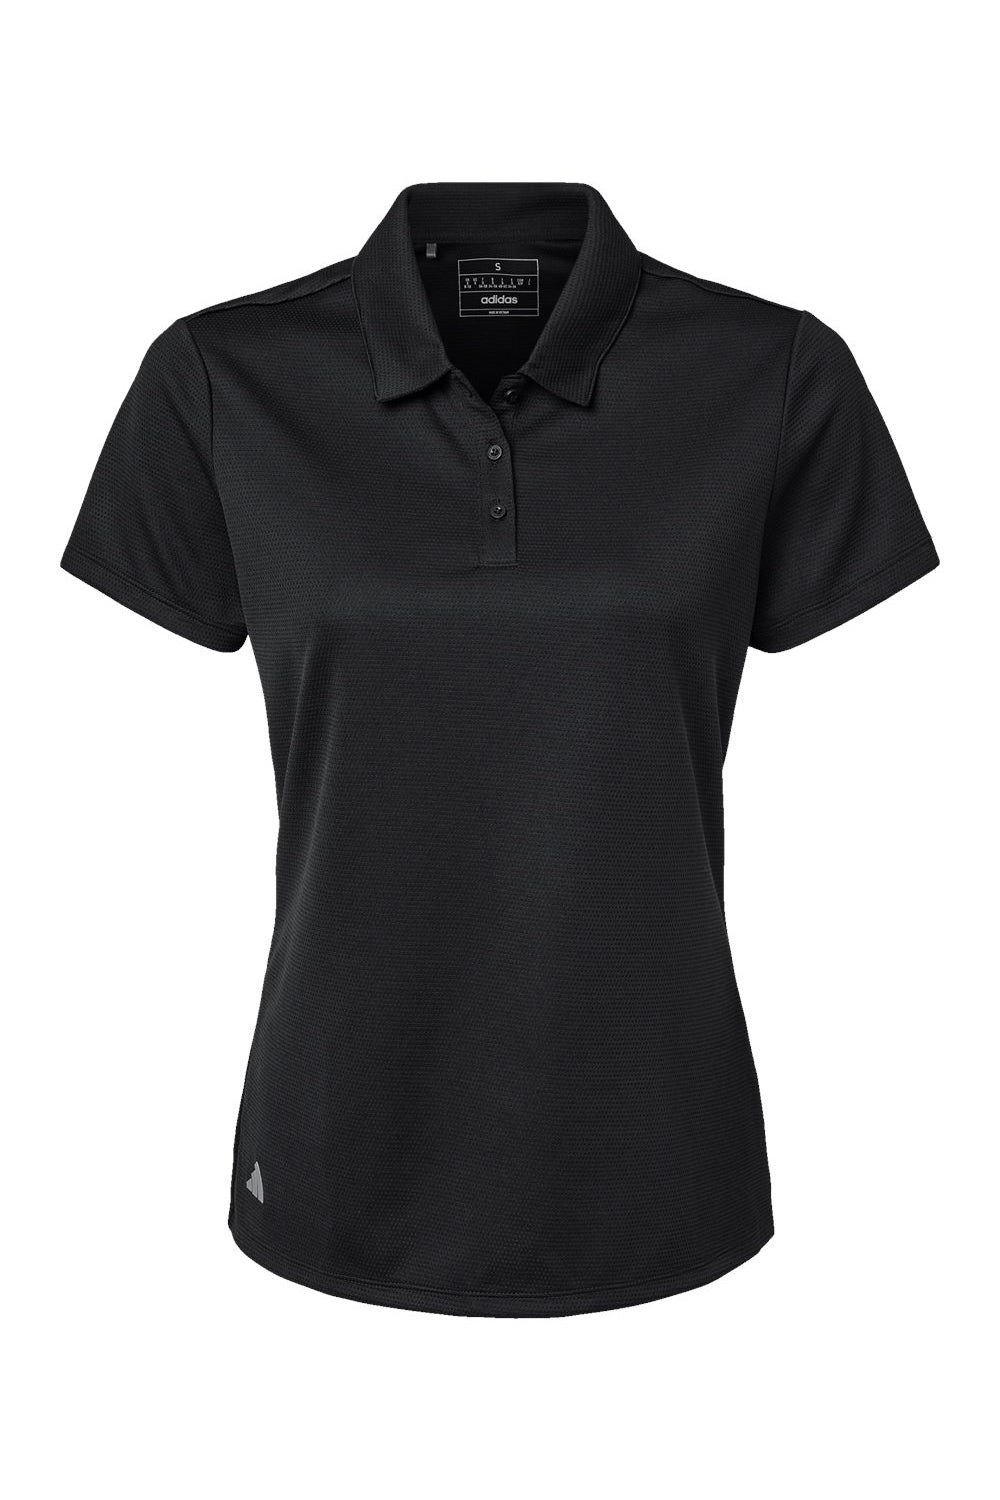 Adidas A581 Womens Micro Pique Short Sleeve Polo Shirt Black Flat Front